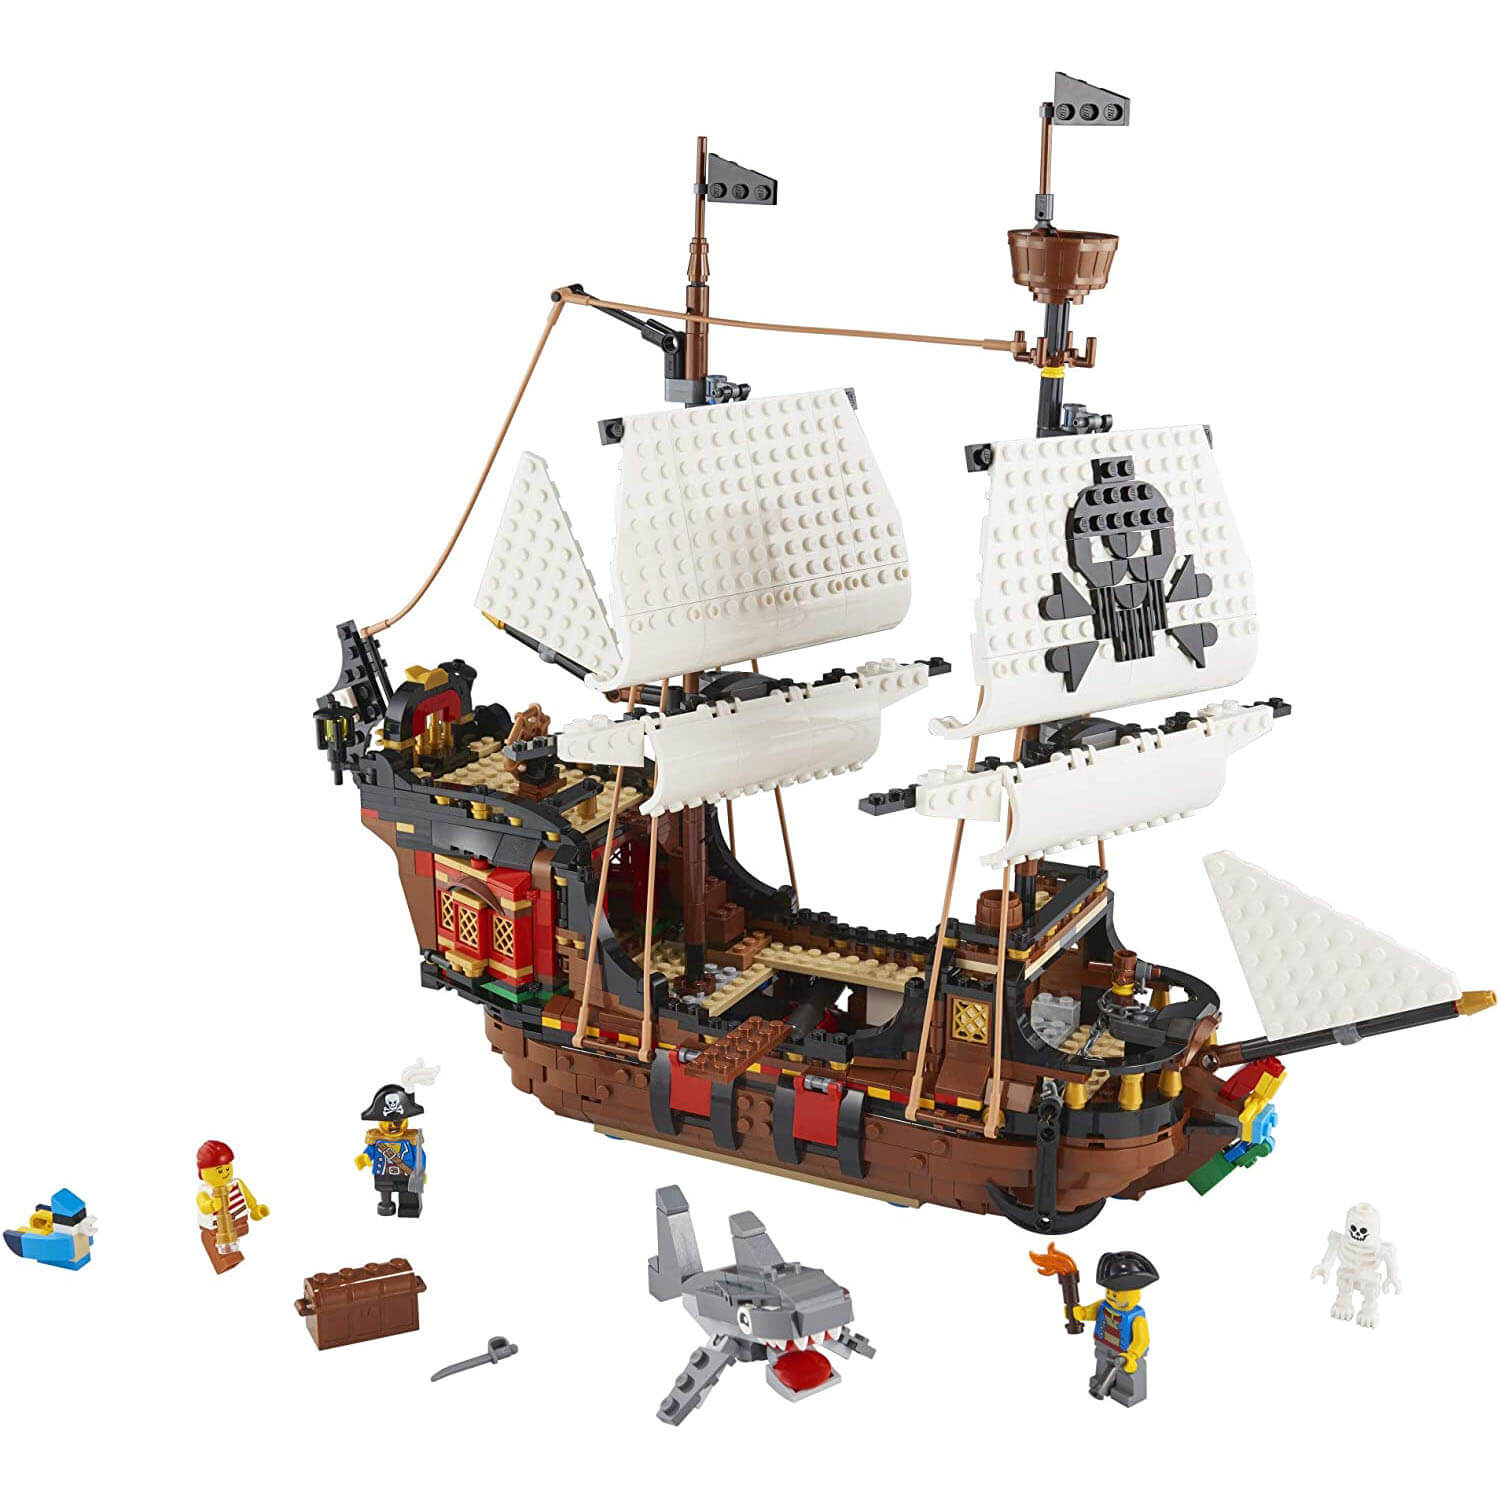 LEGO Creator Pirate Ship 1260 Piece Building Set (31109)